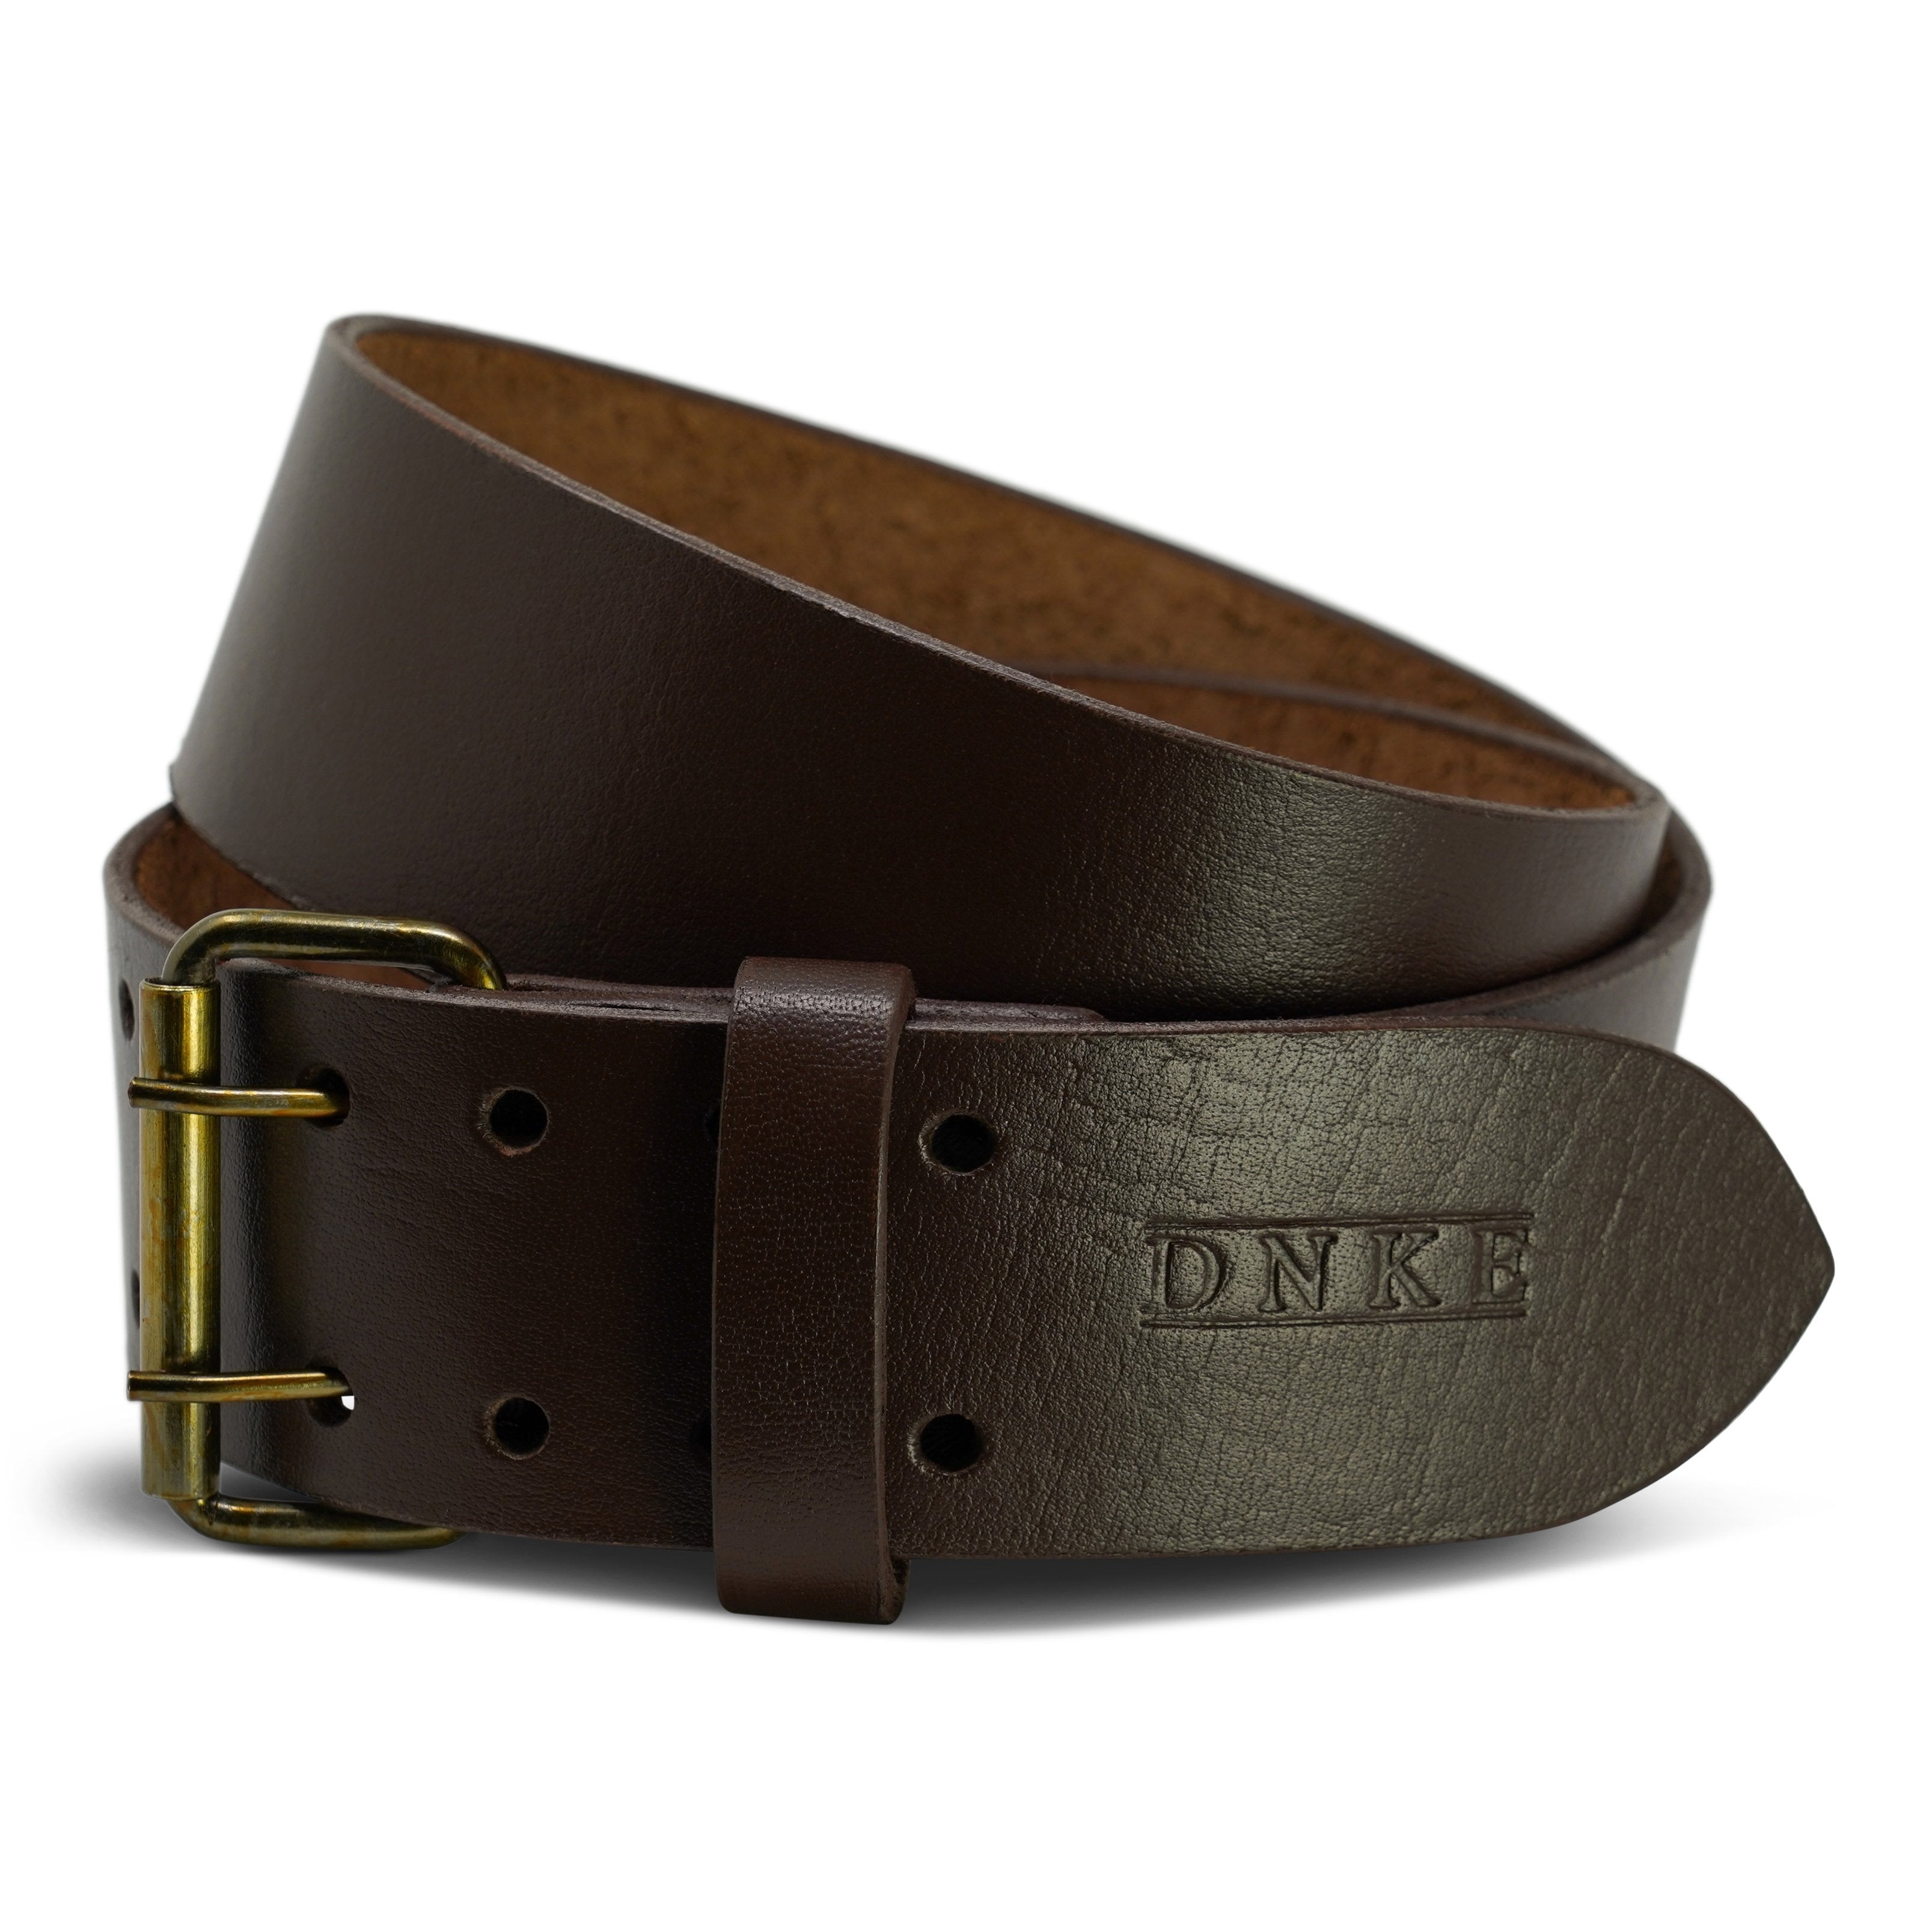 Double Prong Kilt Belt - Brown Leather